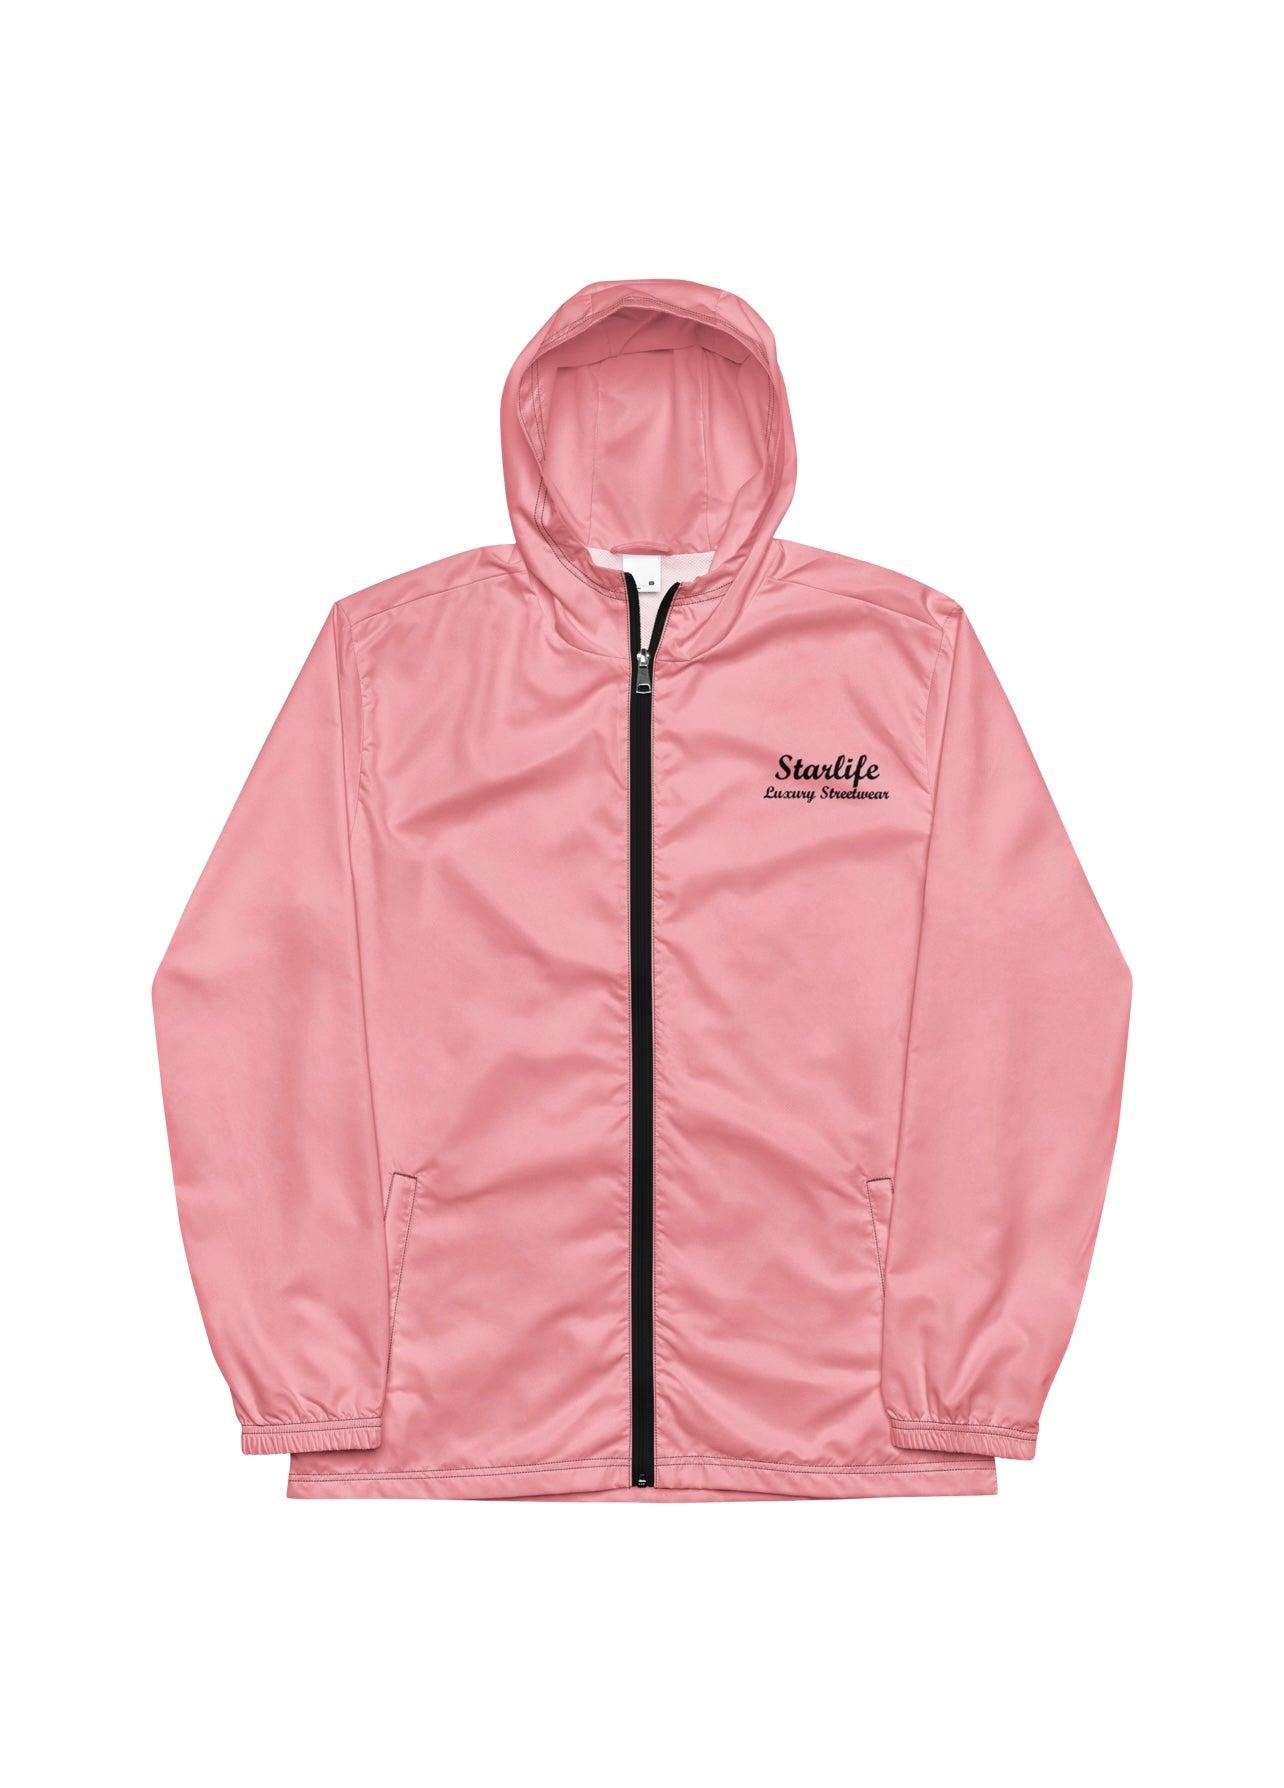 Starlife Pink Track Jacket